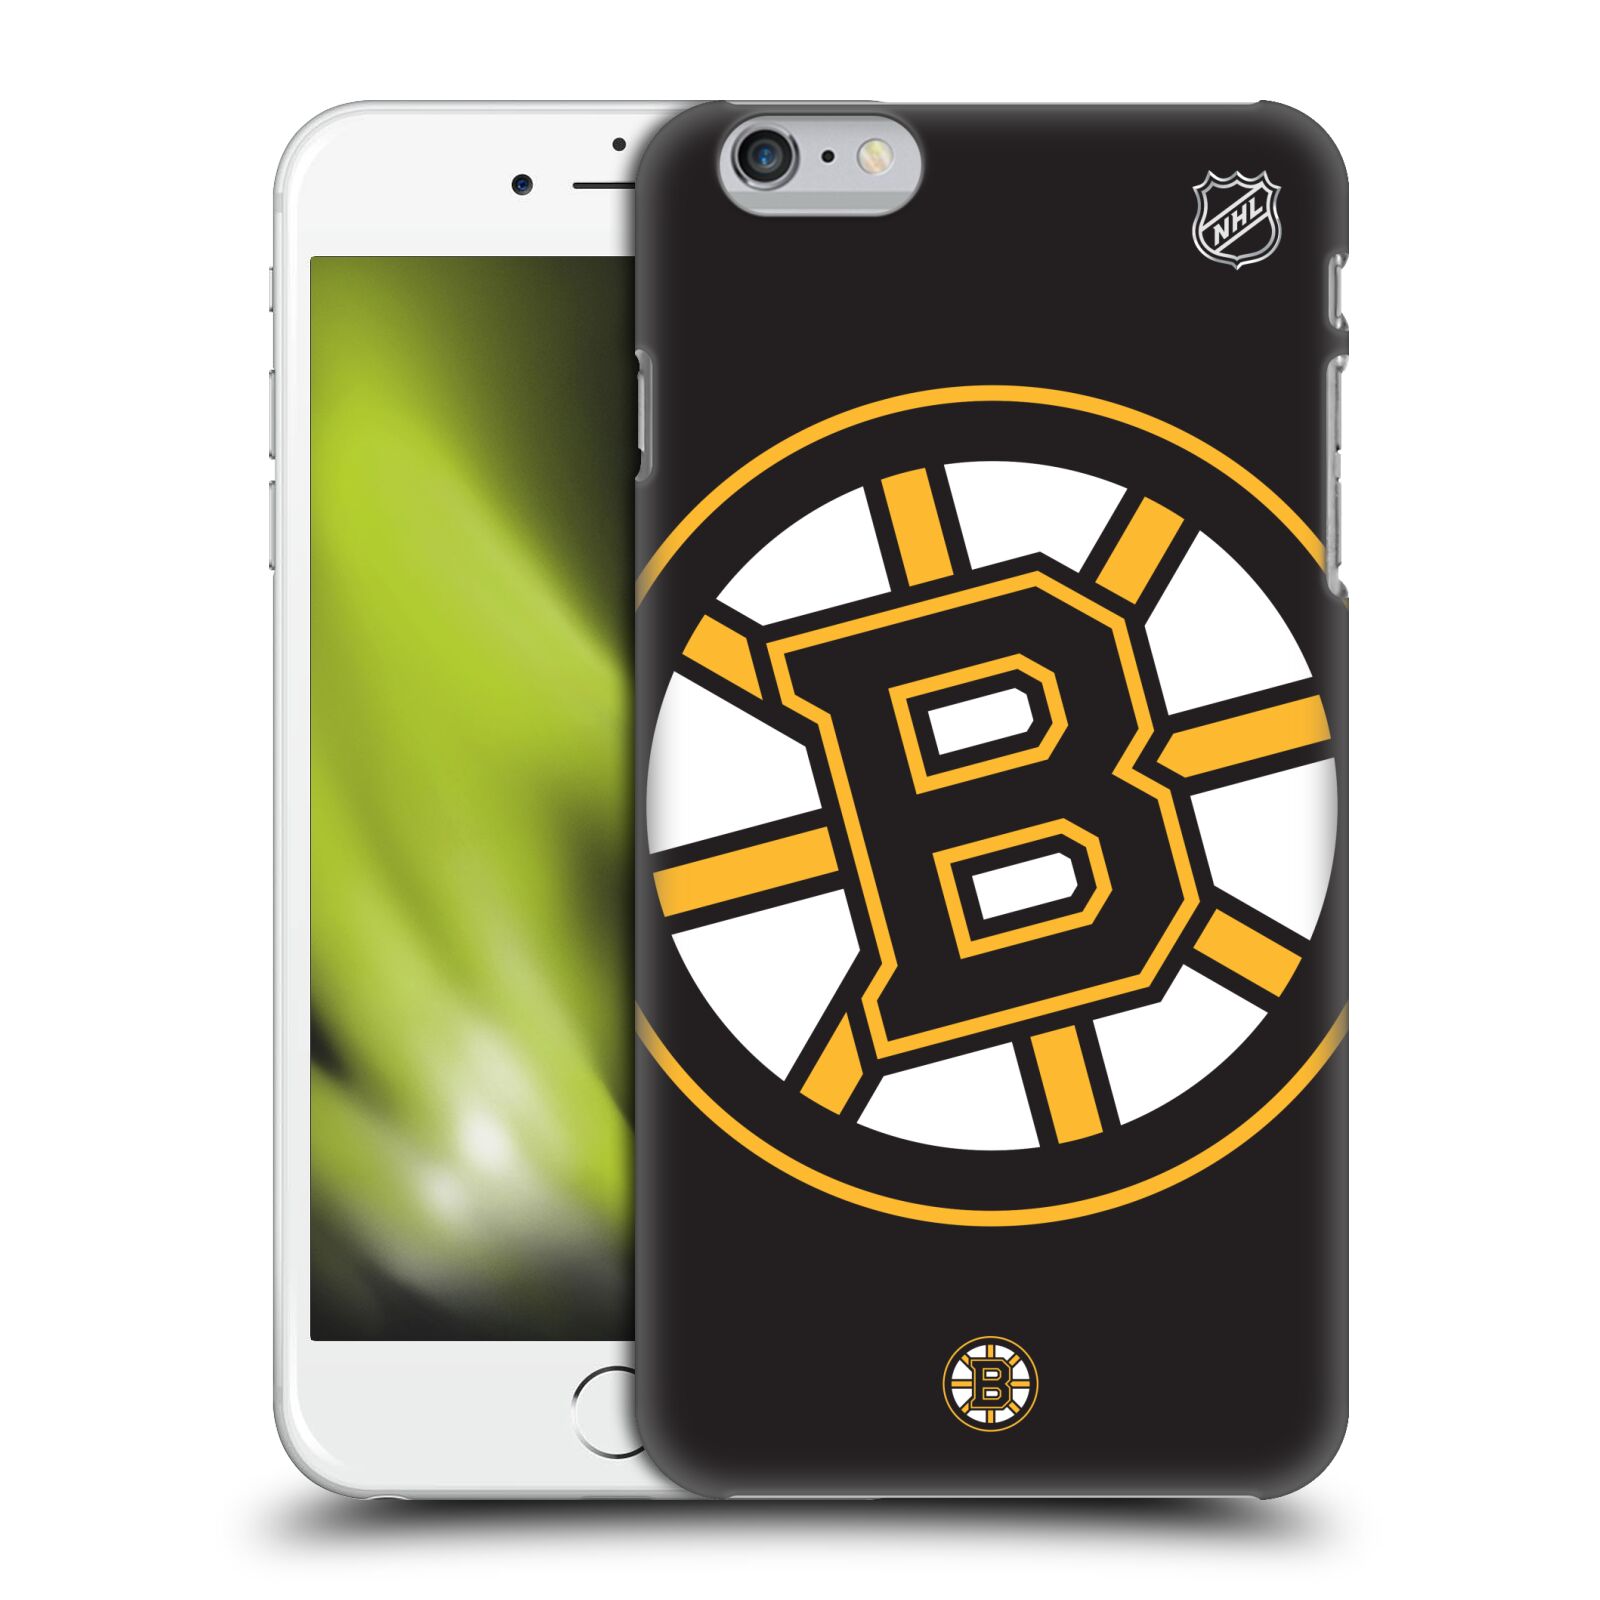 Pouzdro na mobil Apple Iphone 6/6S PLUS - HEAD CASE - Hokej NHL - Boston Bruins - velký znak